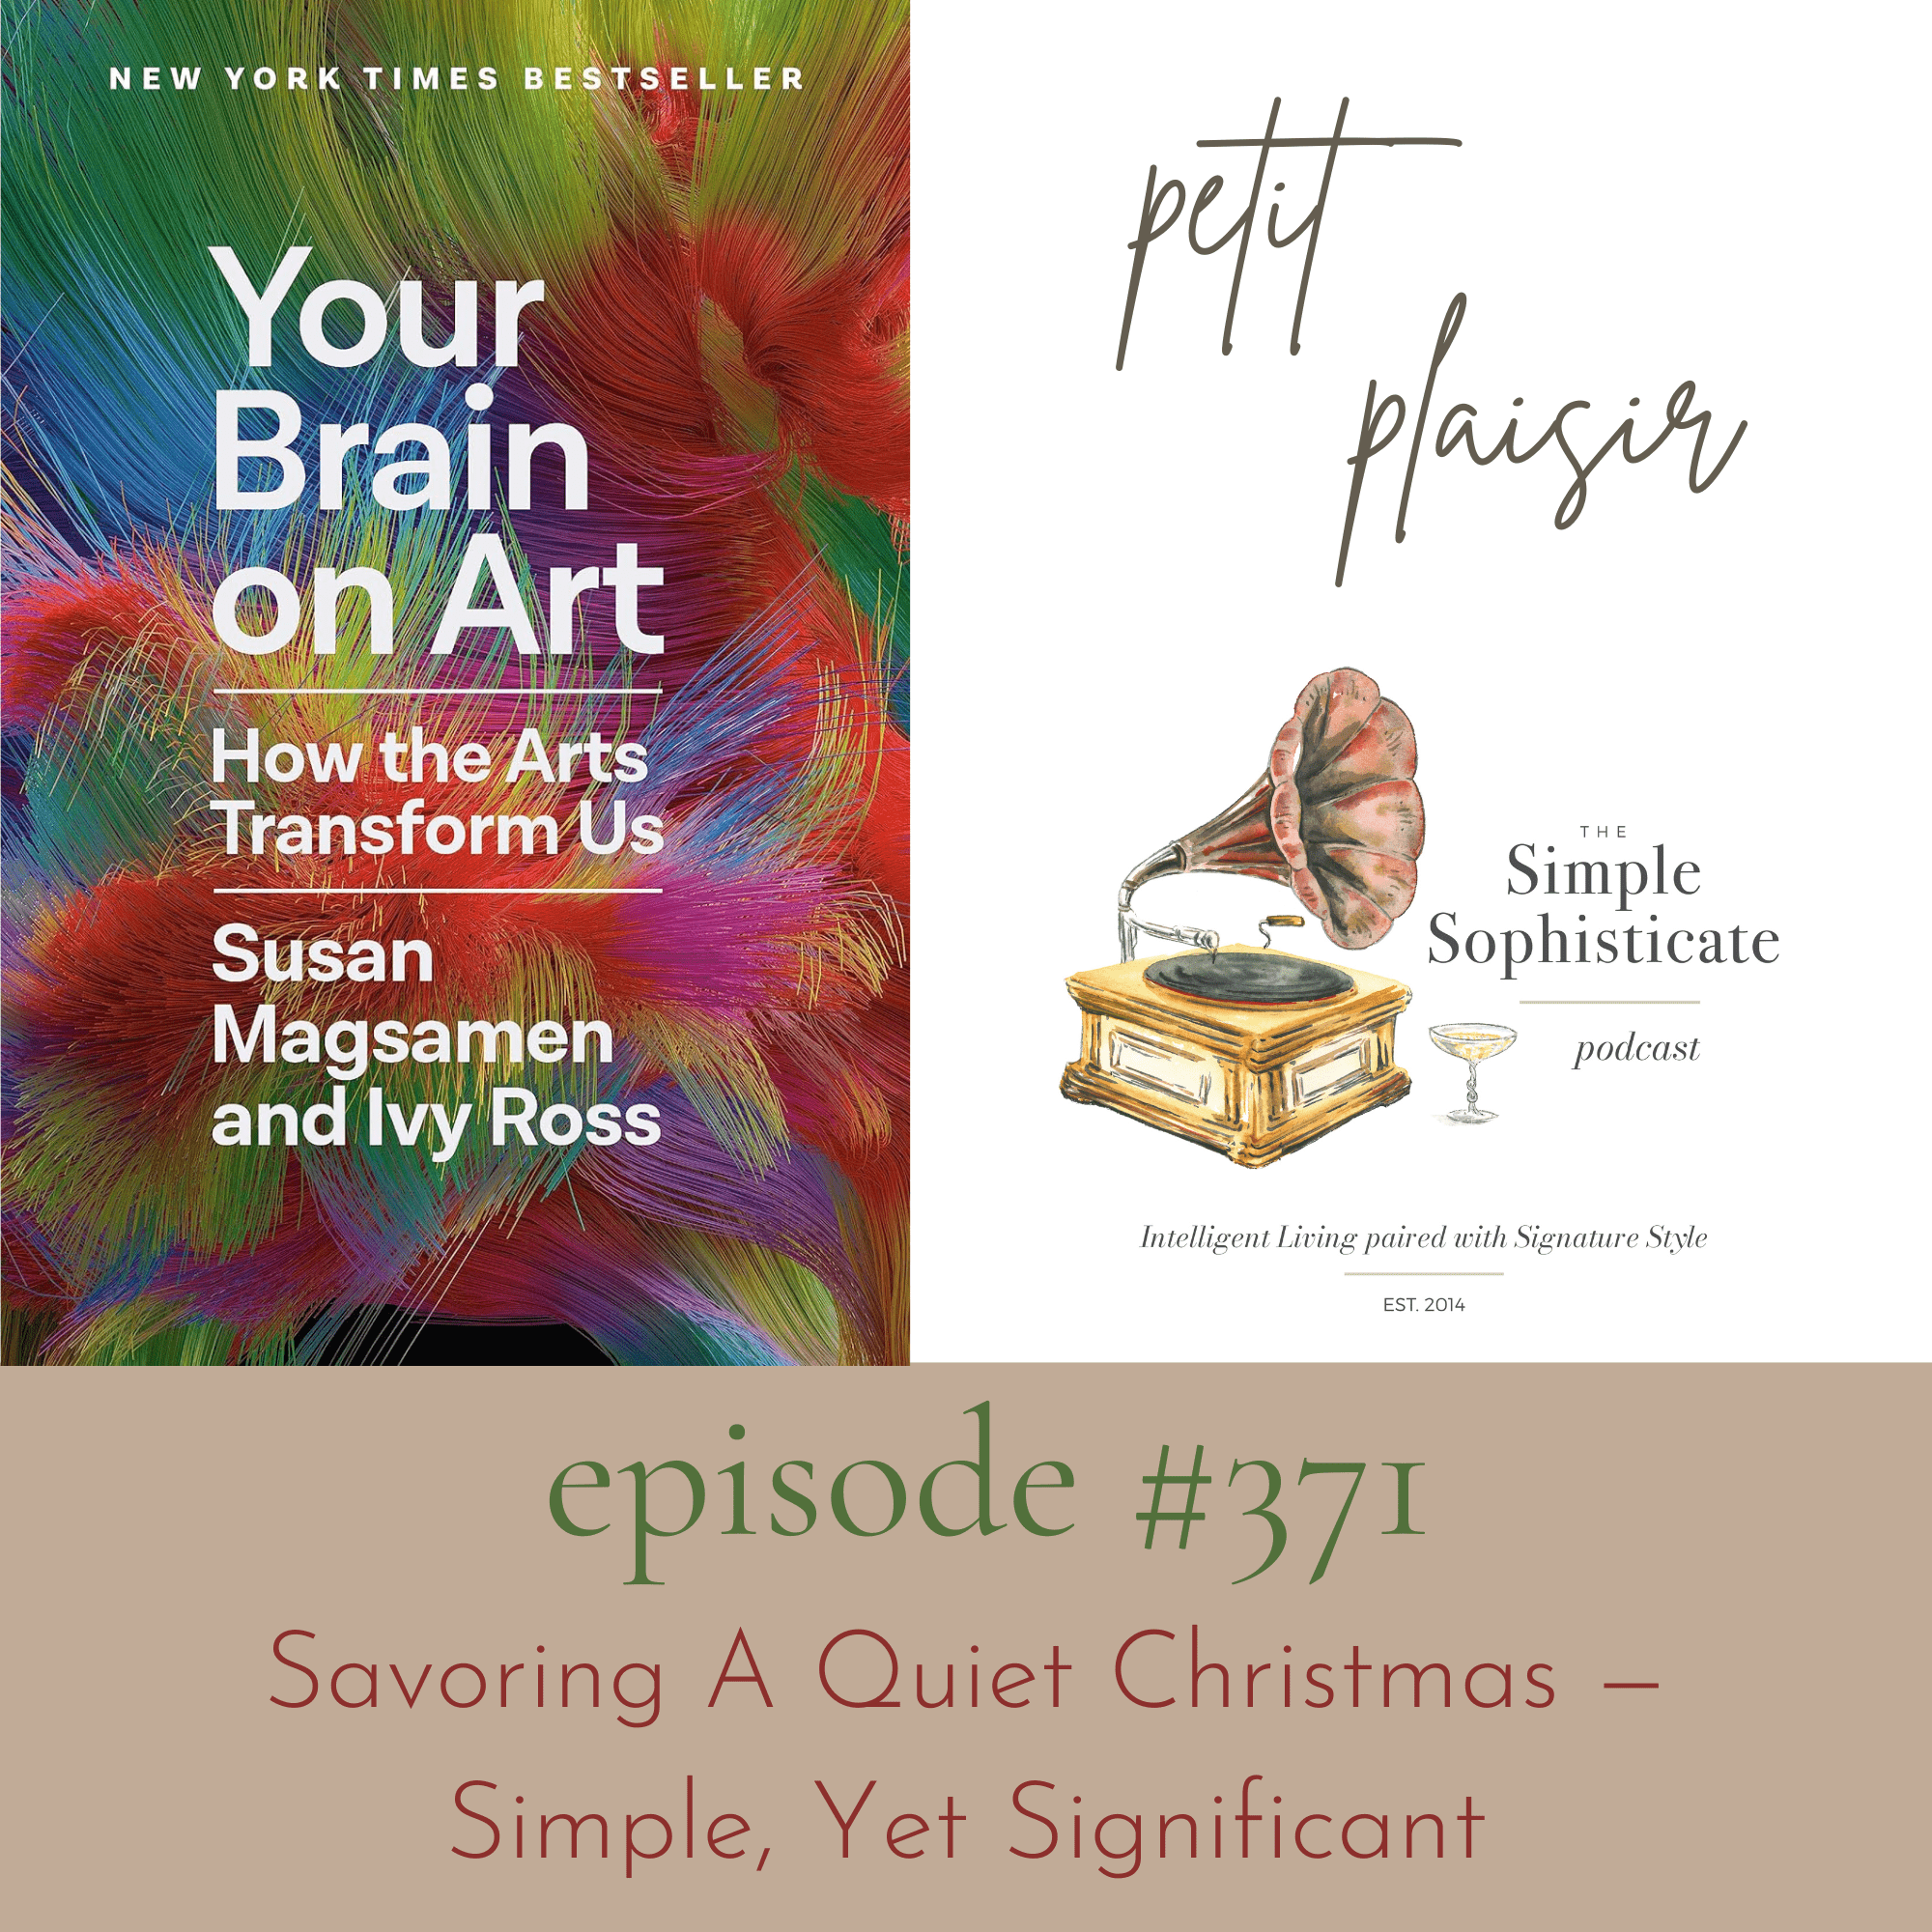 Your Brain on Art, a book — petit plaisir #371